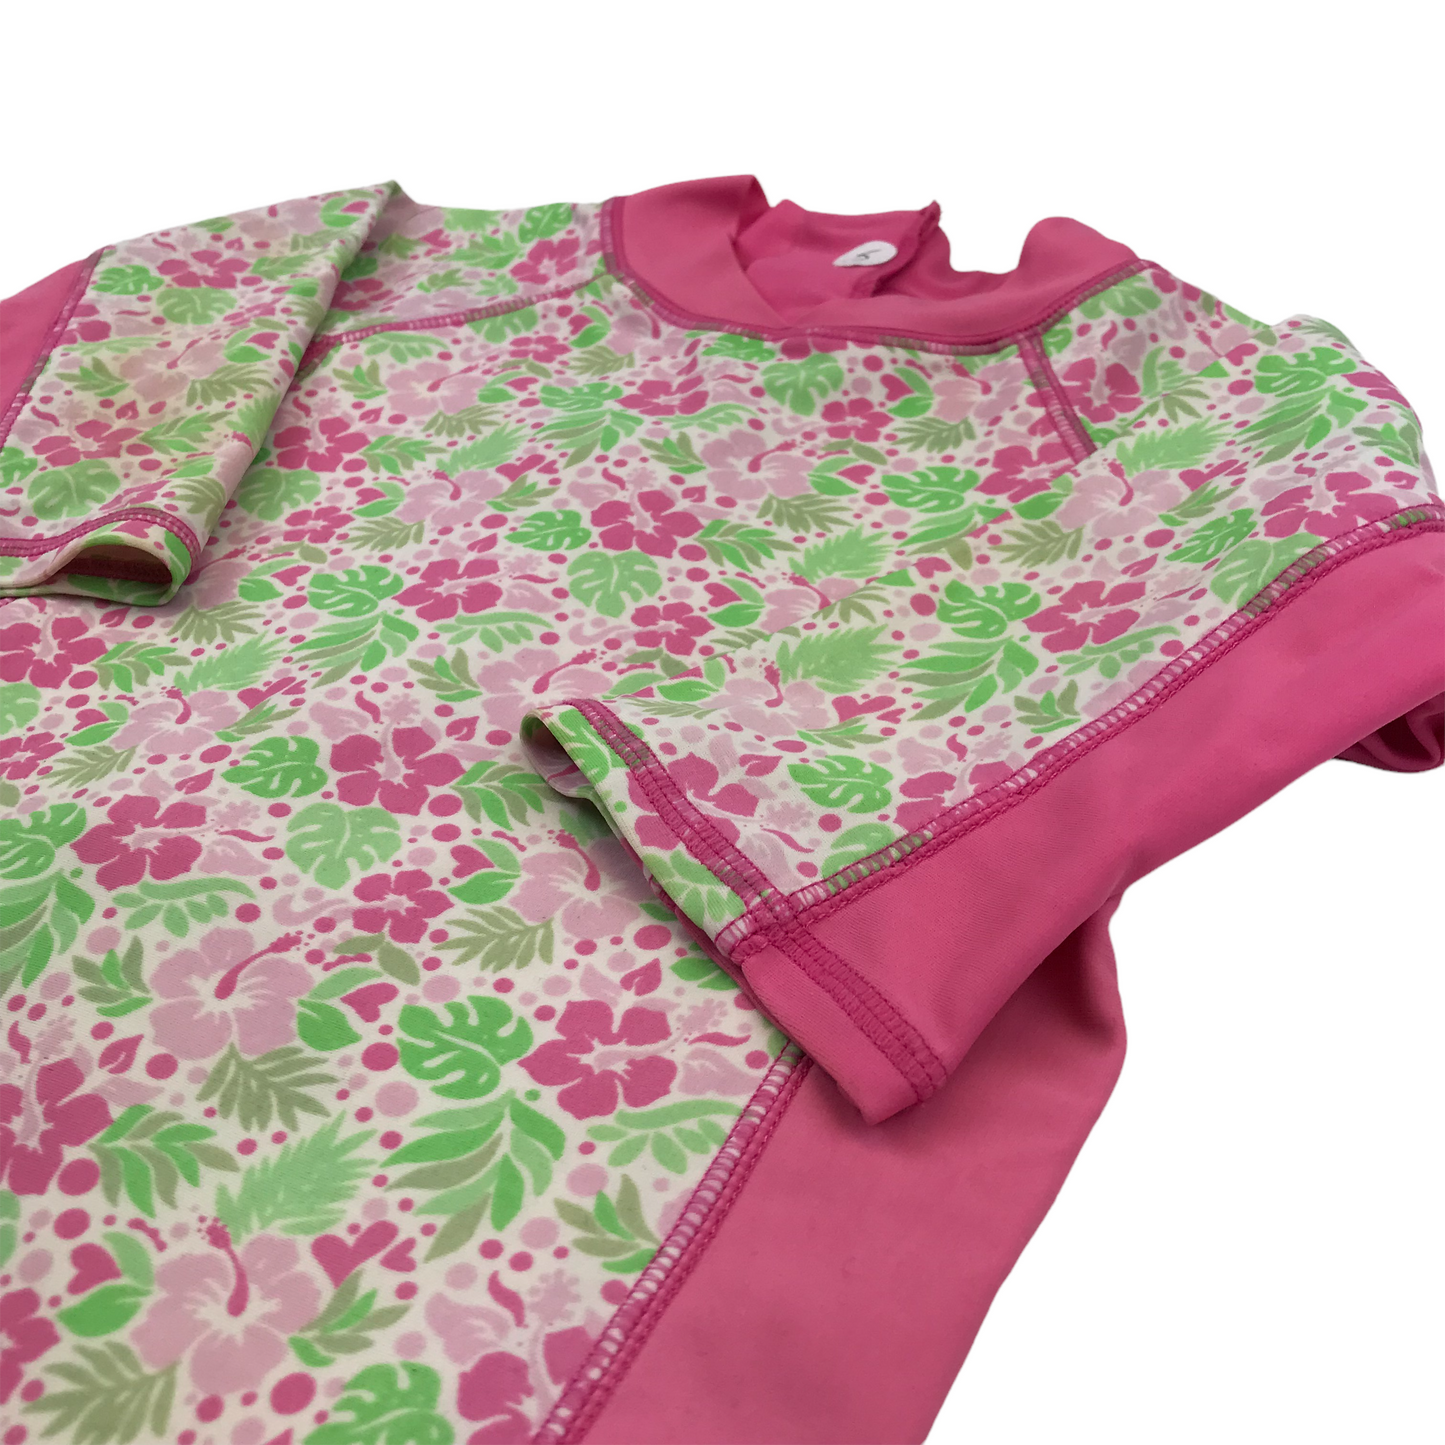 Jojo Maman Bebe Pink Floral 1-Piece Swimsuit Age 5